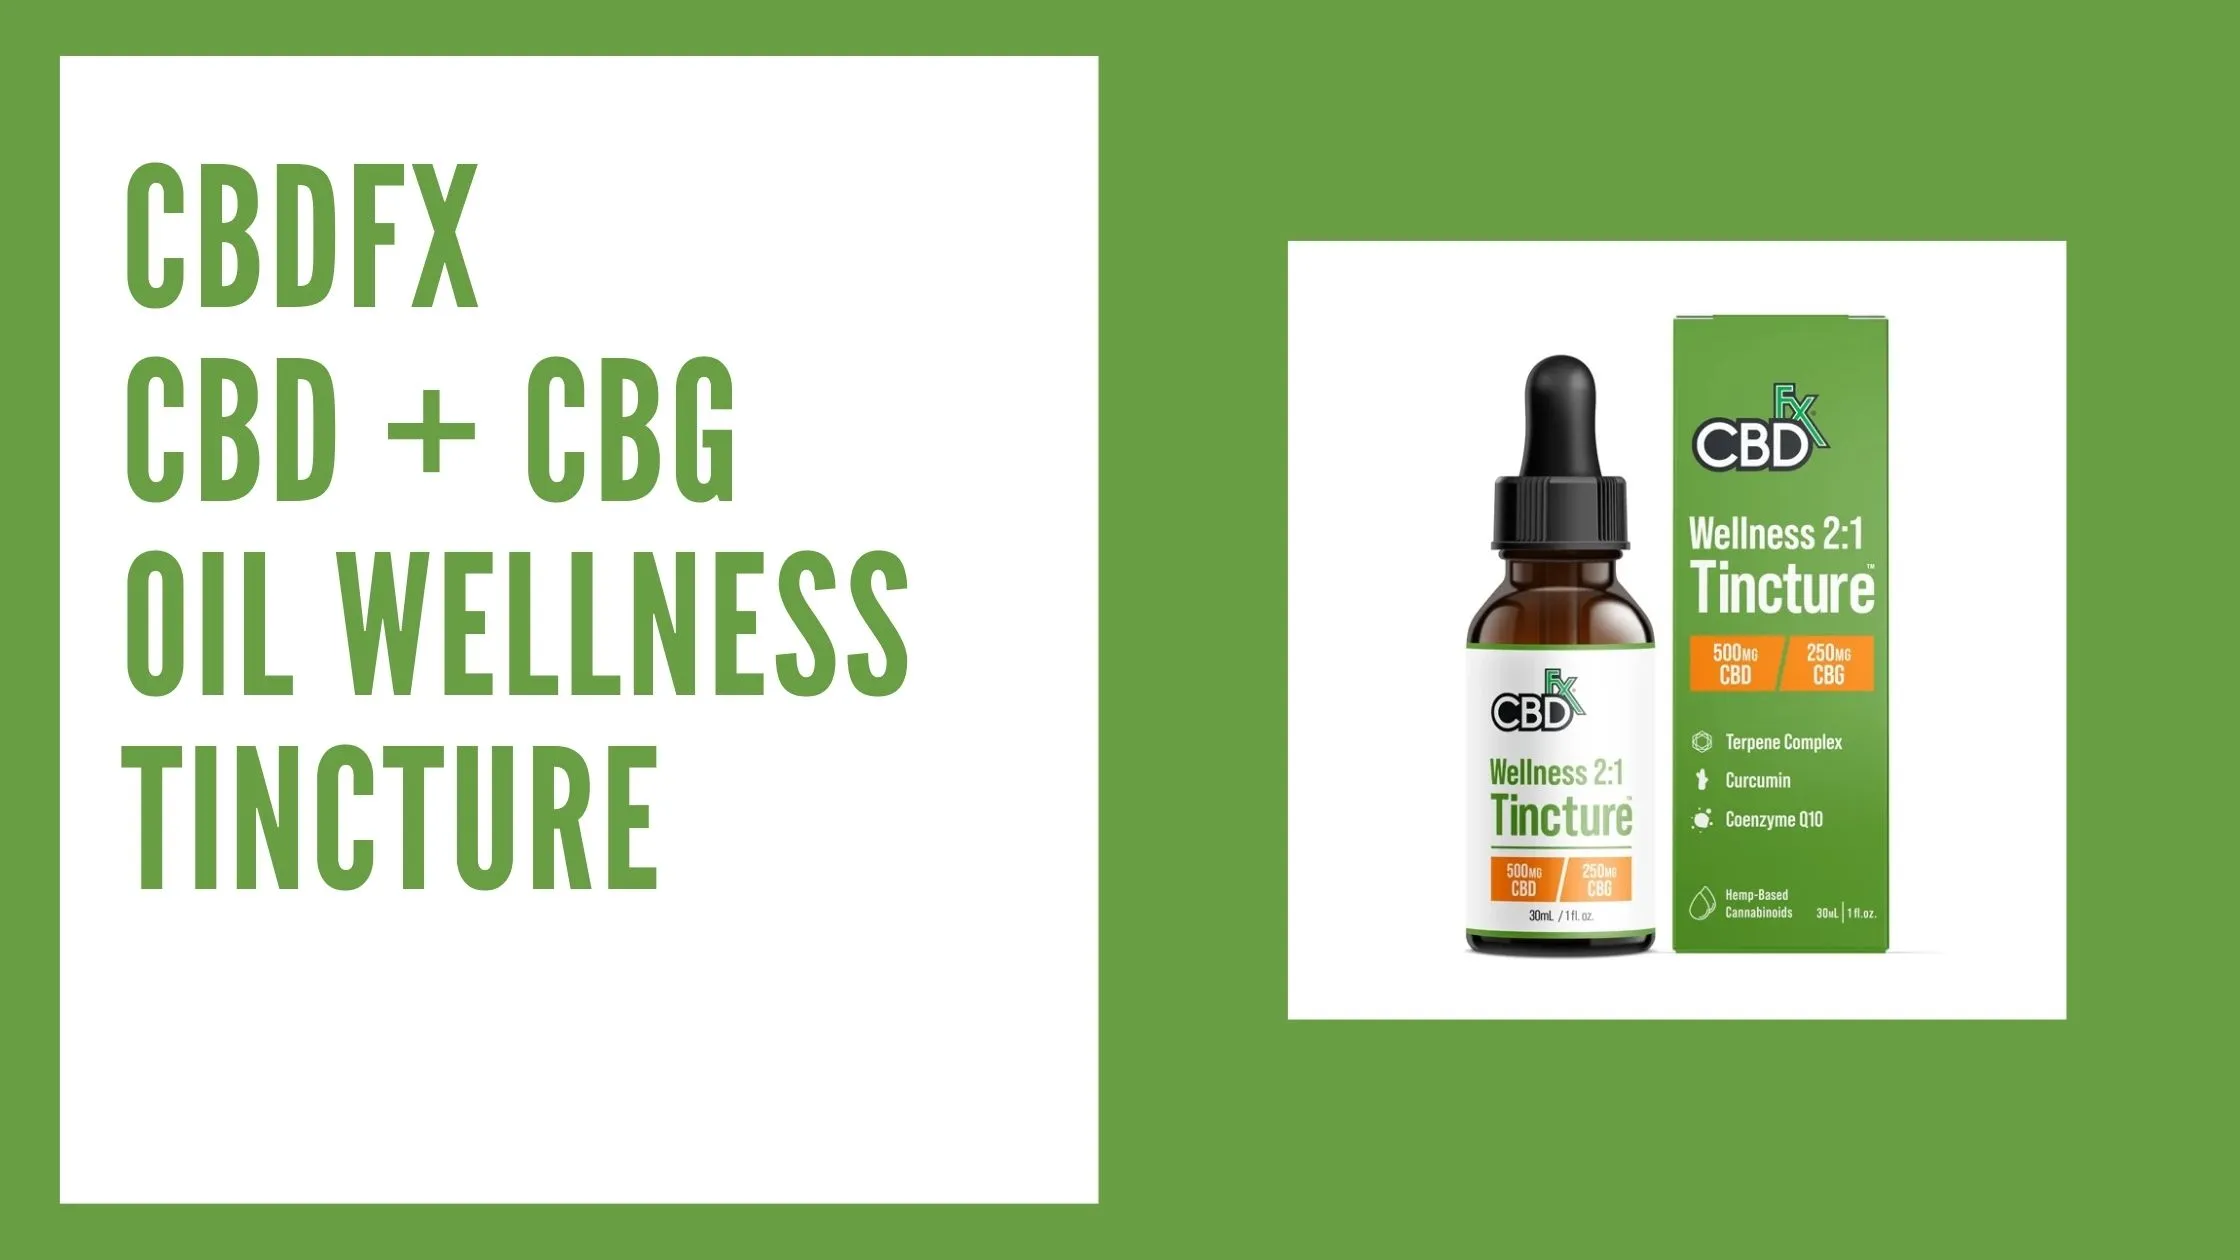 cbdfx cbd + cbg oil wellness tincture